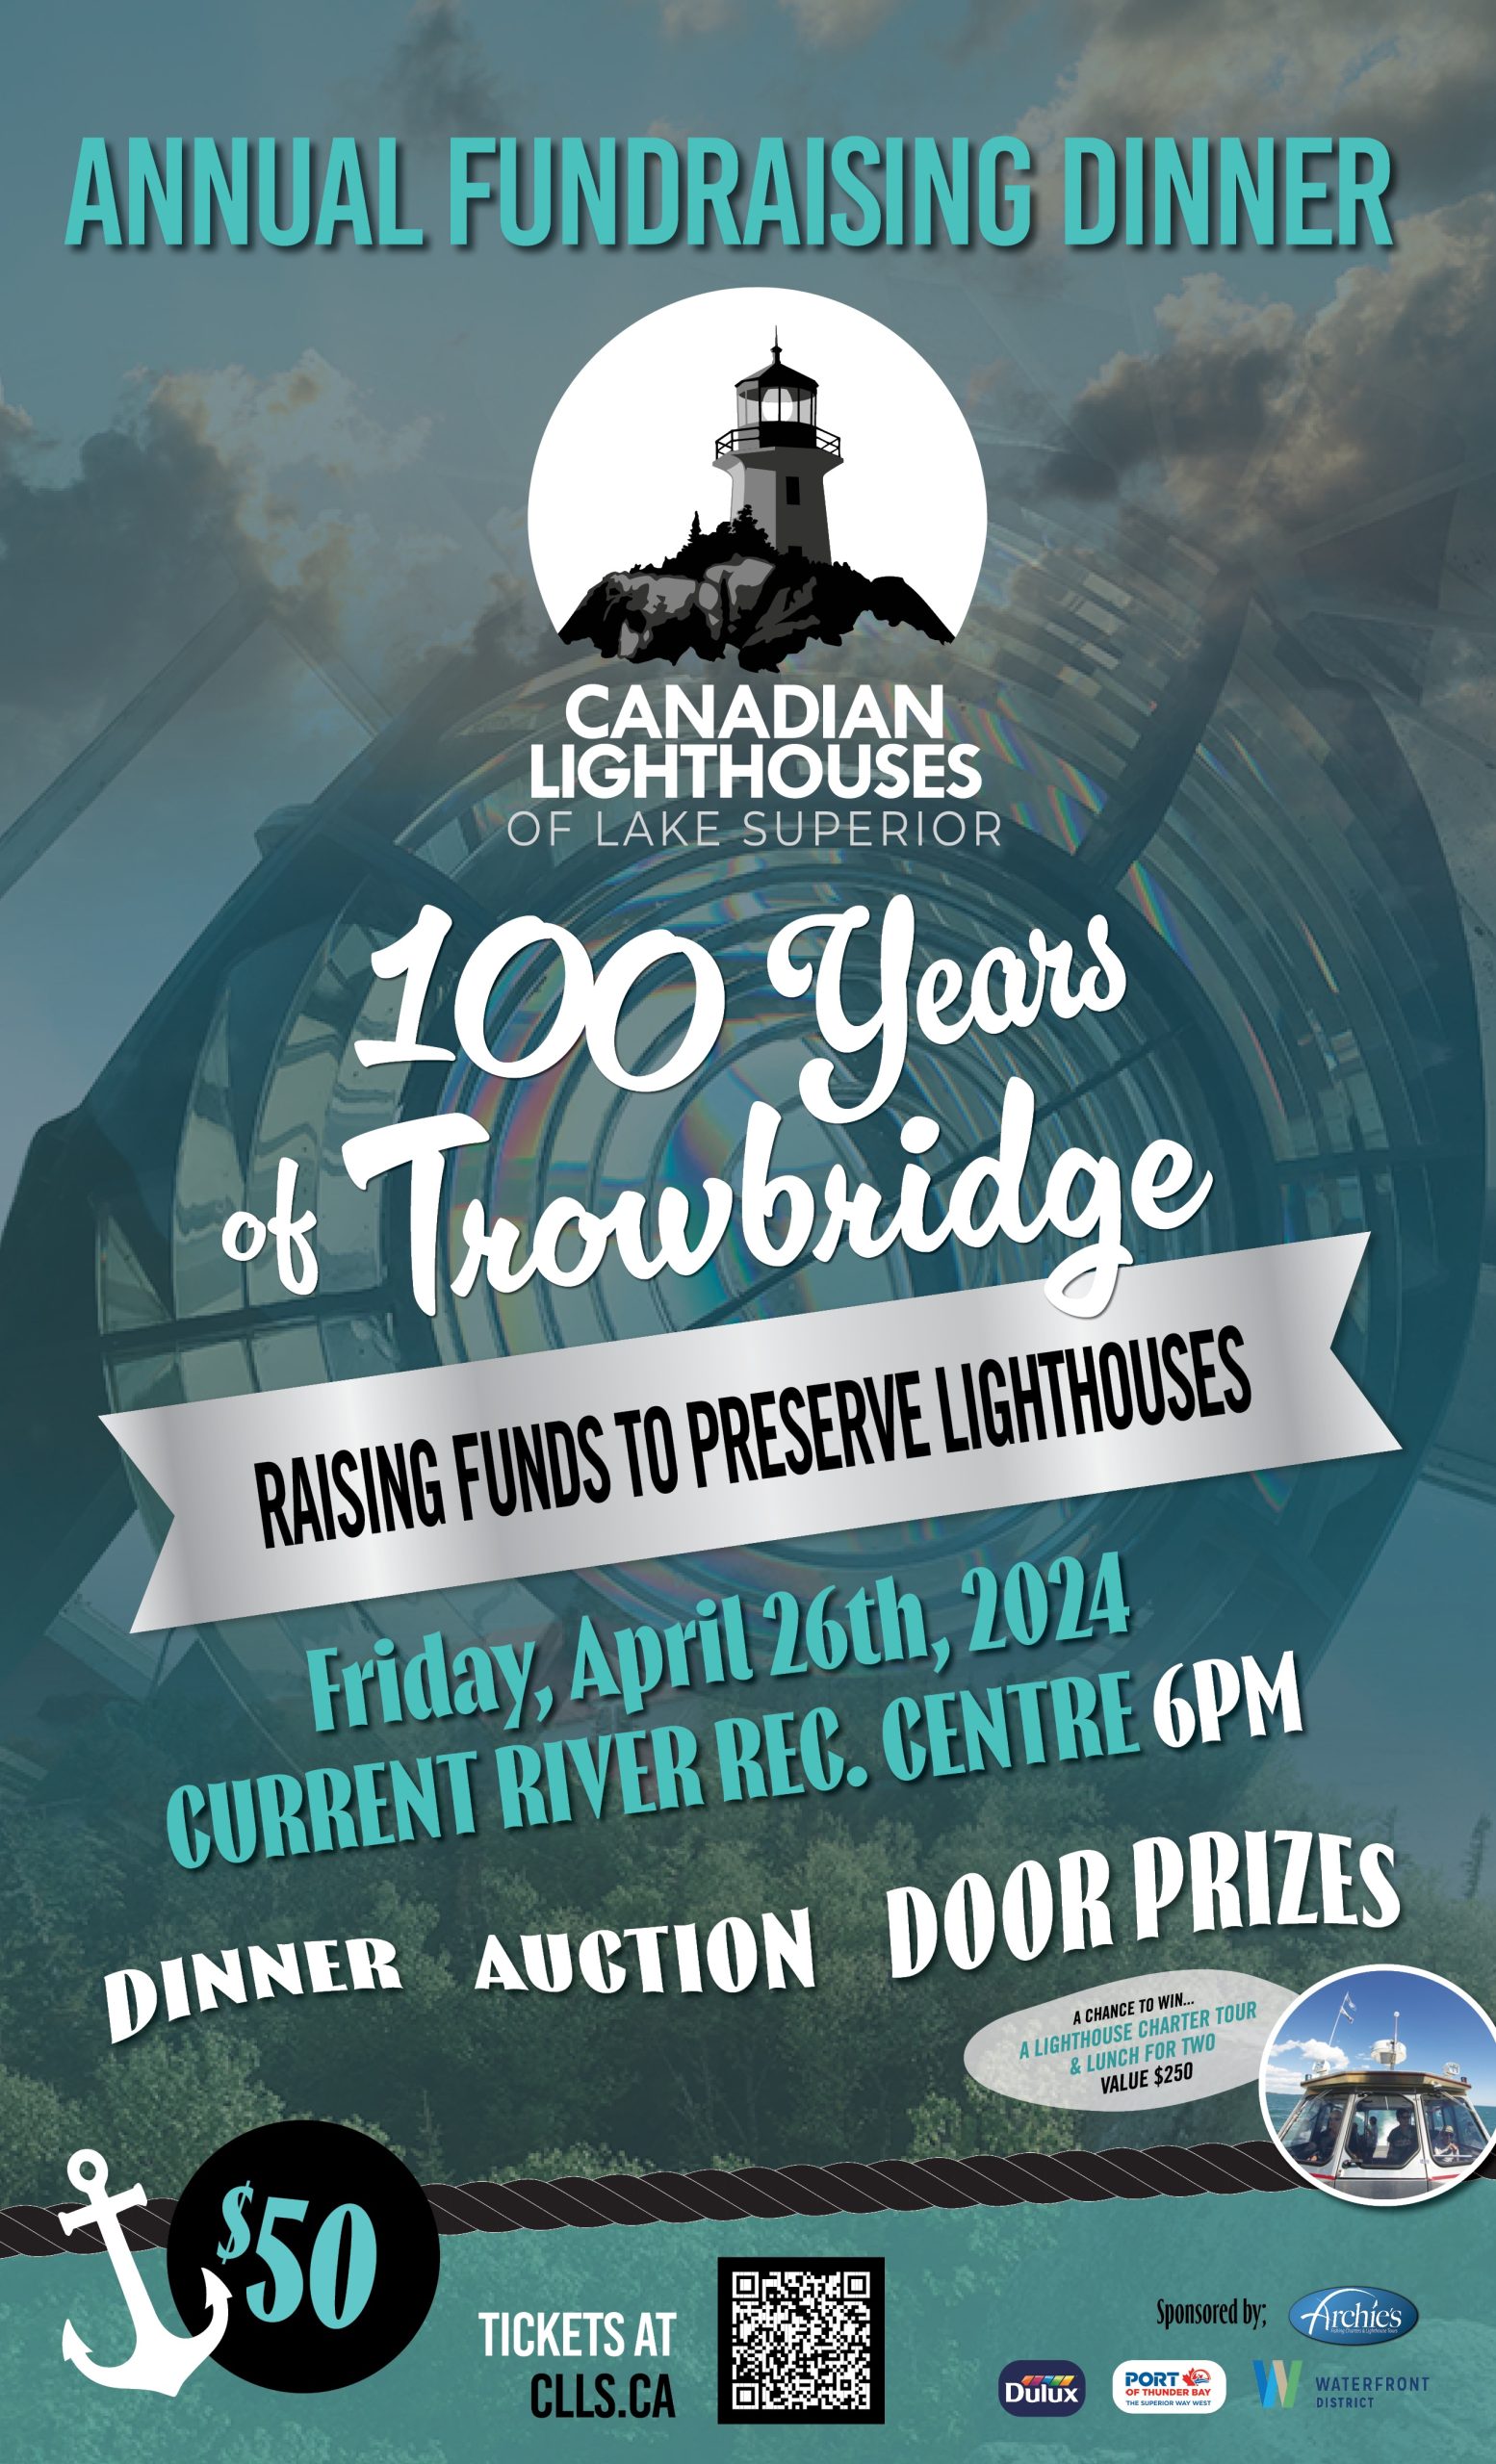 Canadian Lighthouses of Lake Superior Fundraising Dinner – 100 Years of Trowbridge